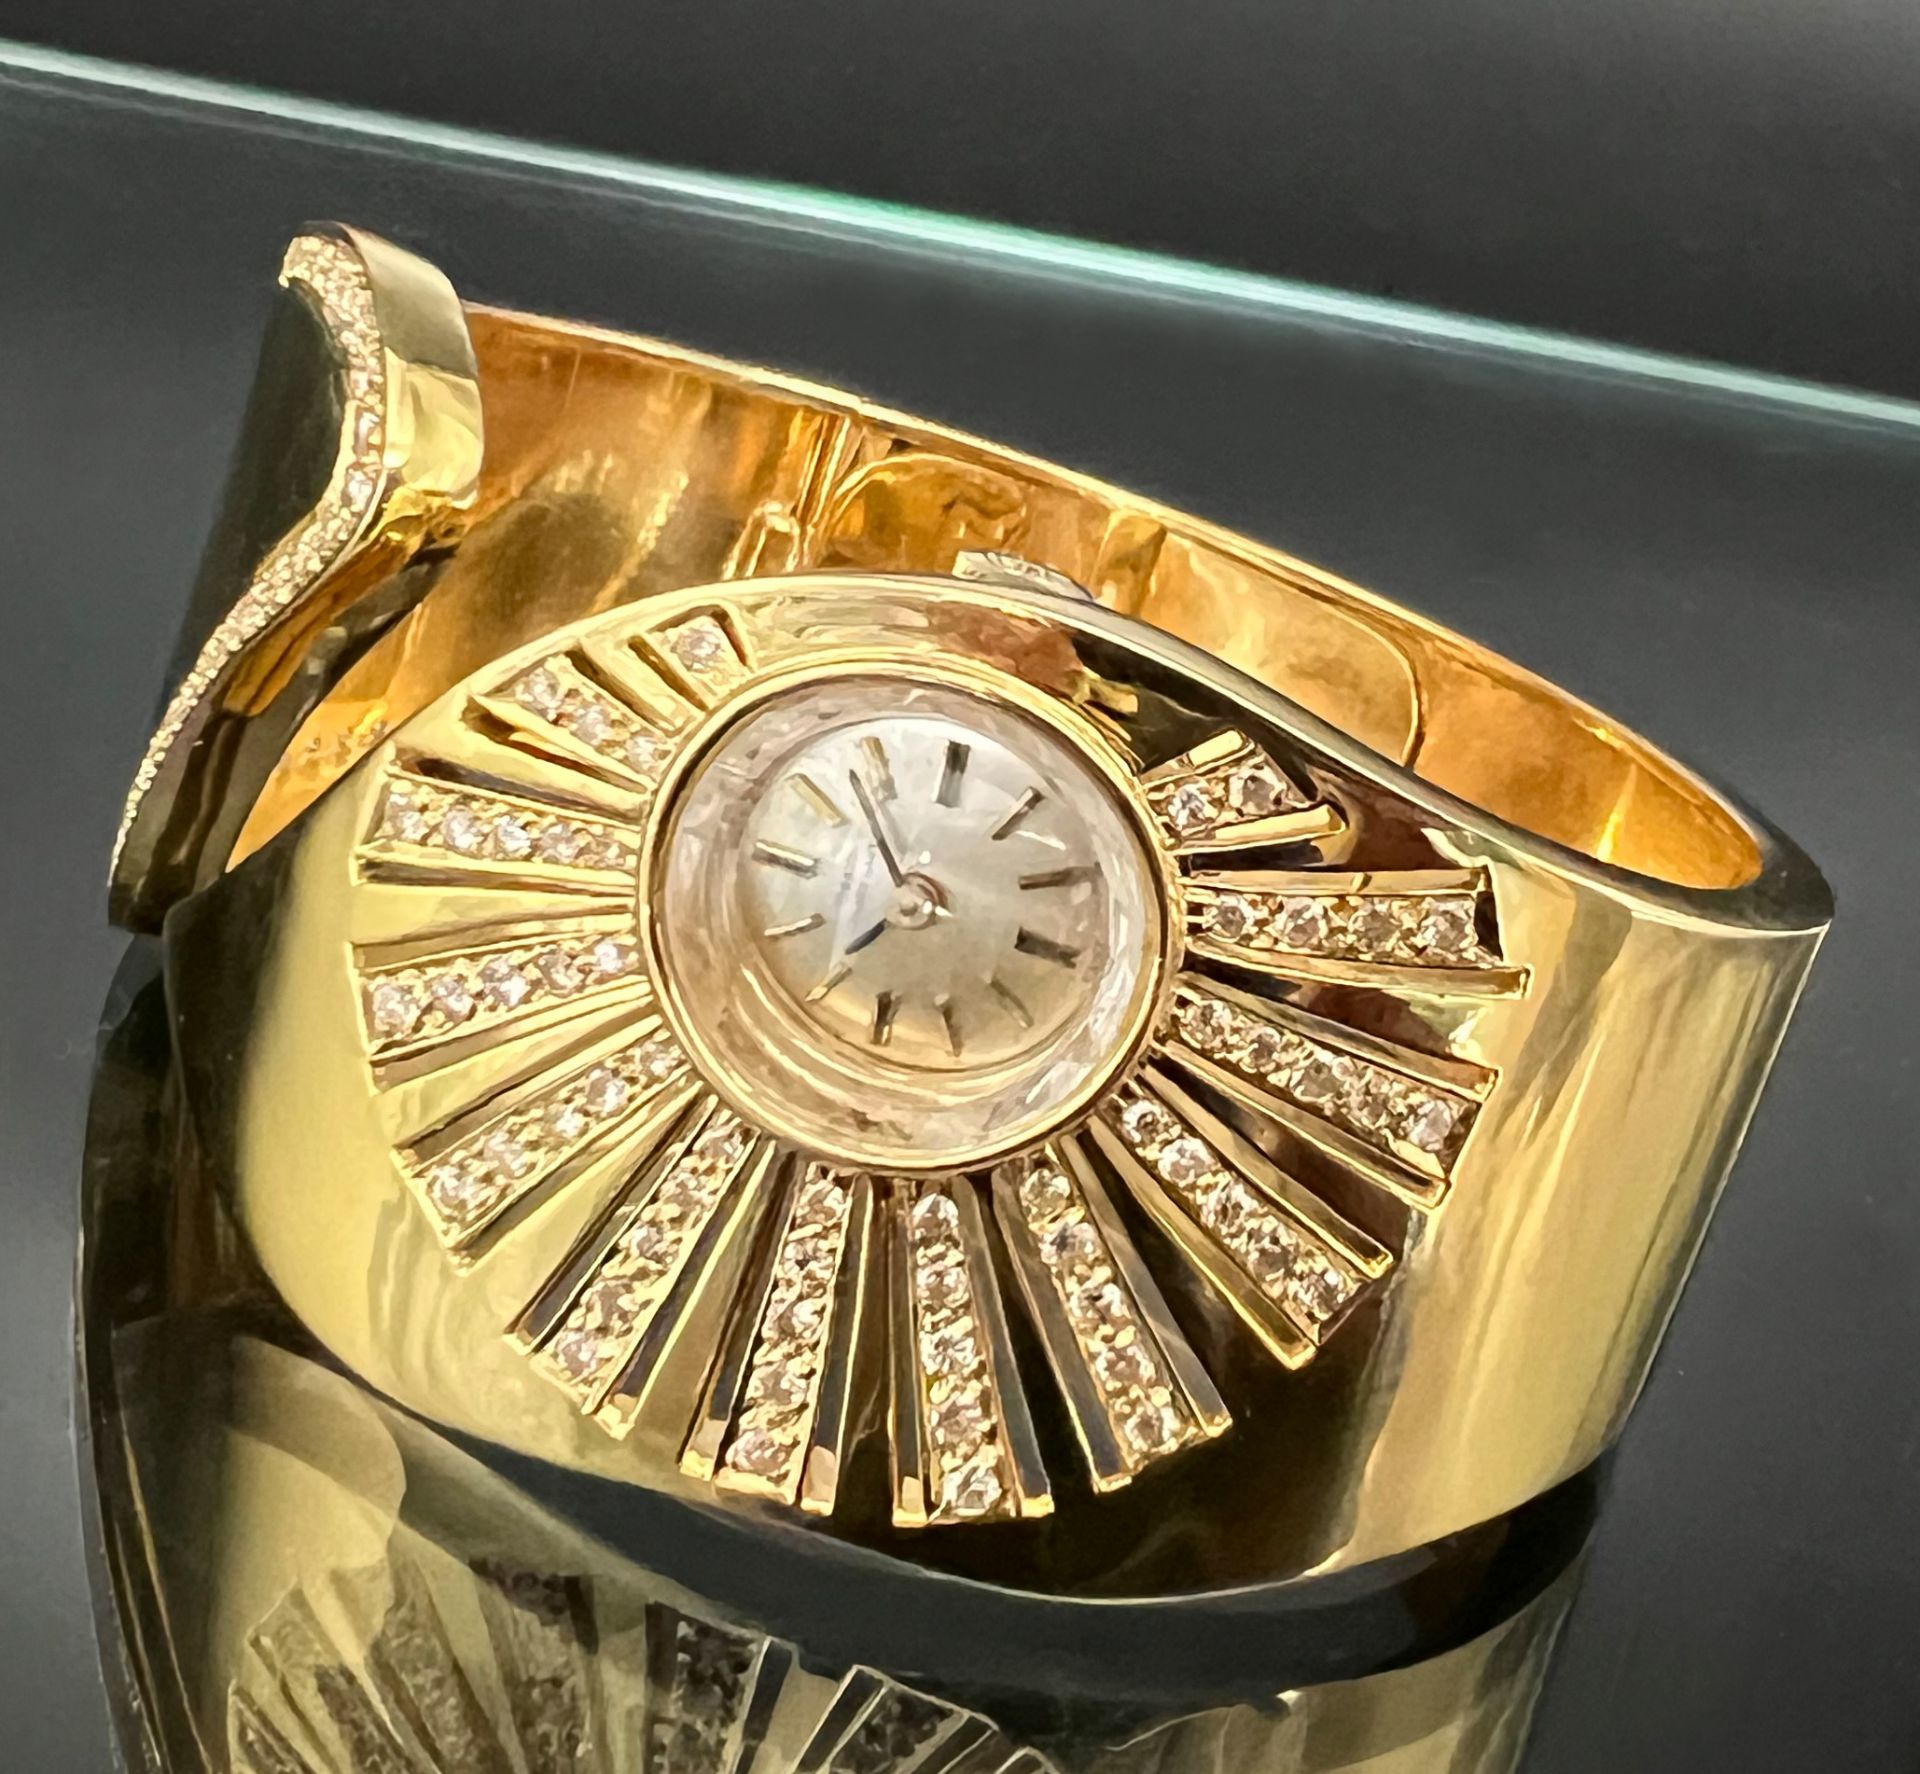 GIRARD-PERREGAUX ladies' wristwatch. 750 yellow gold set with diamonds.